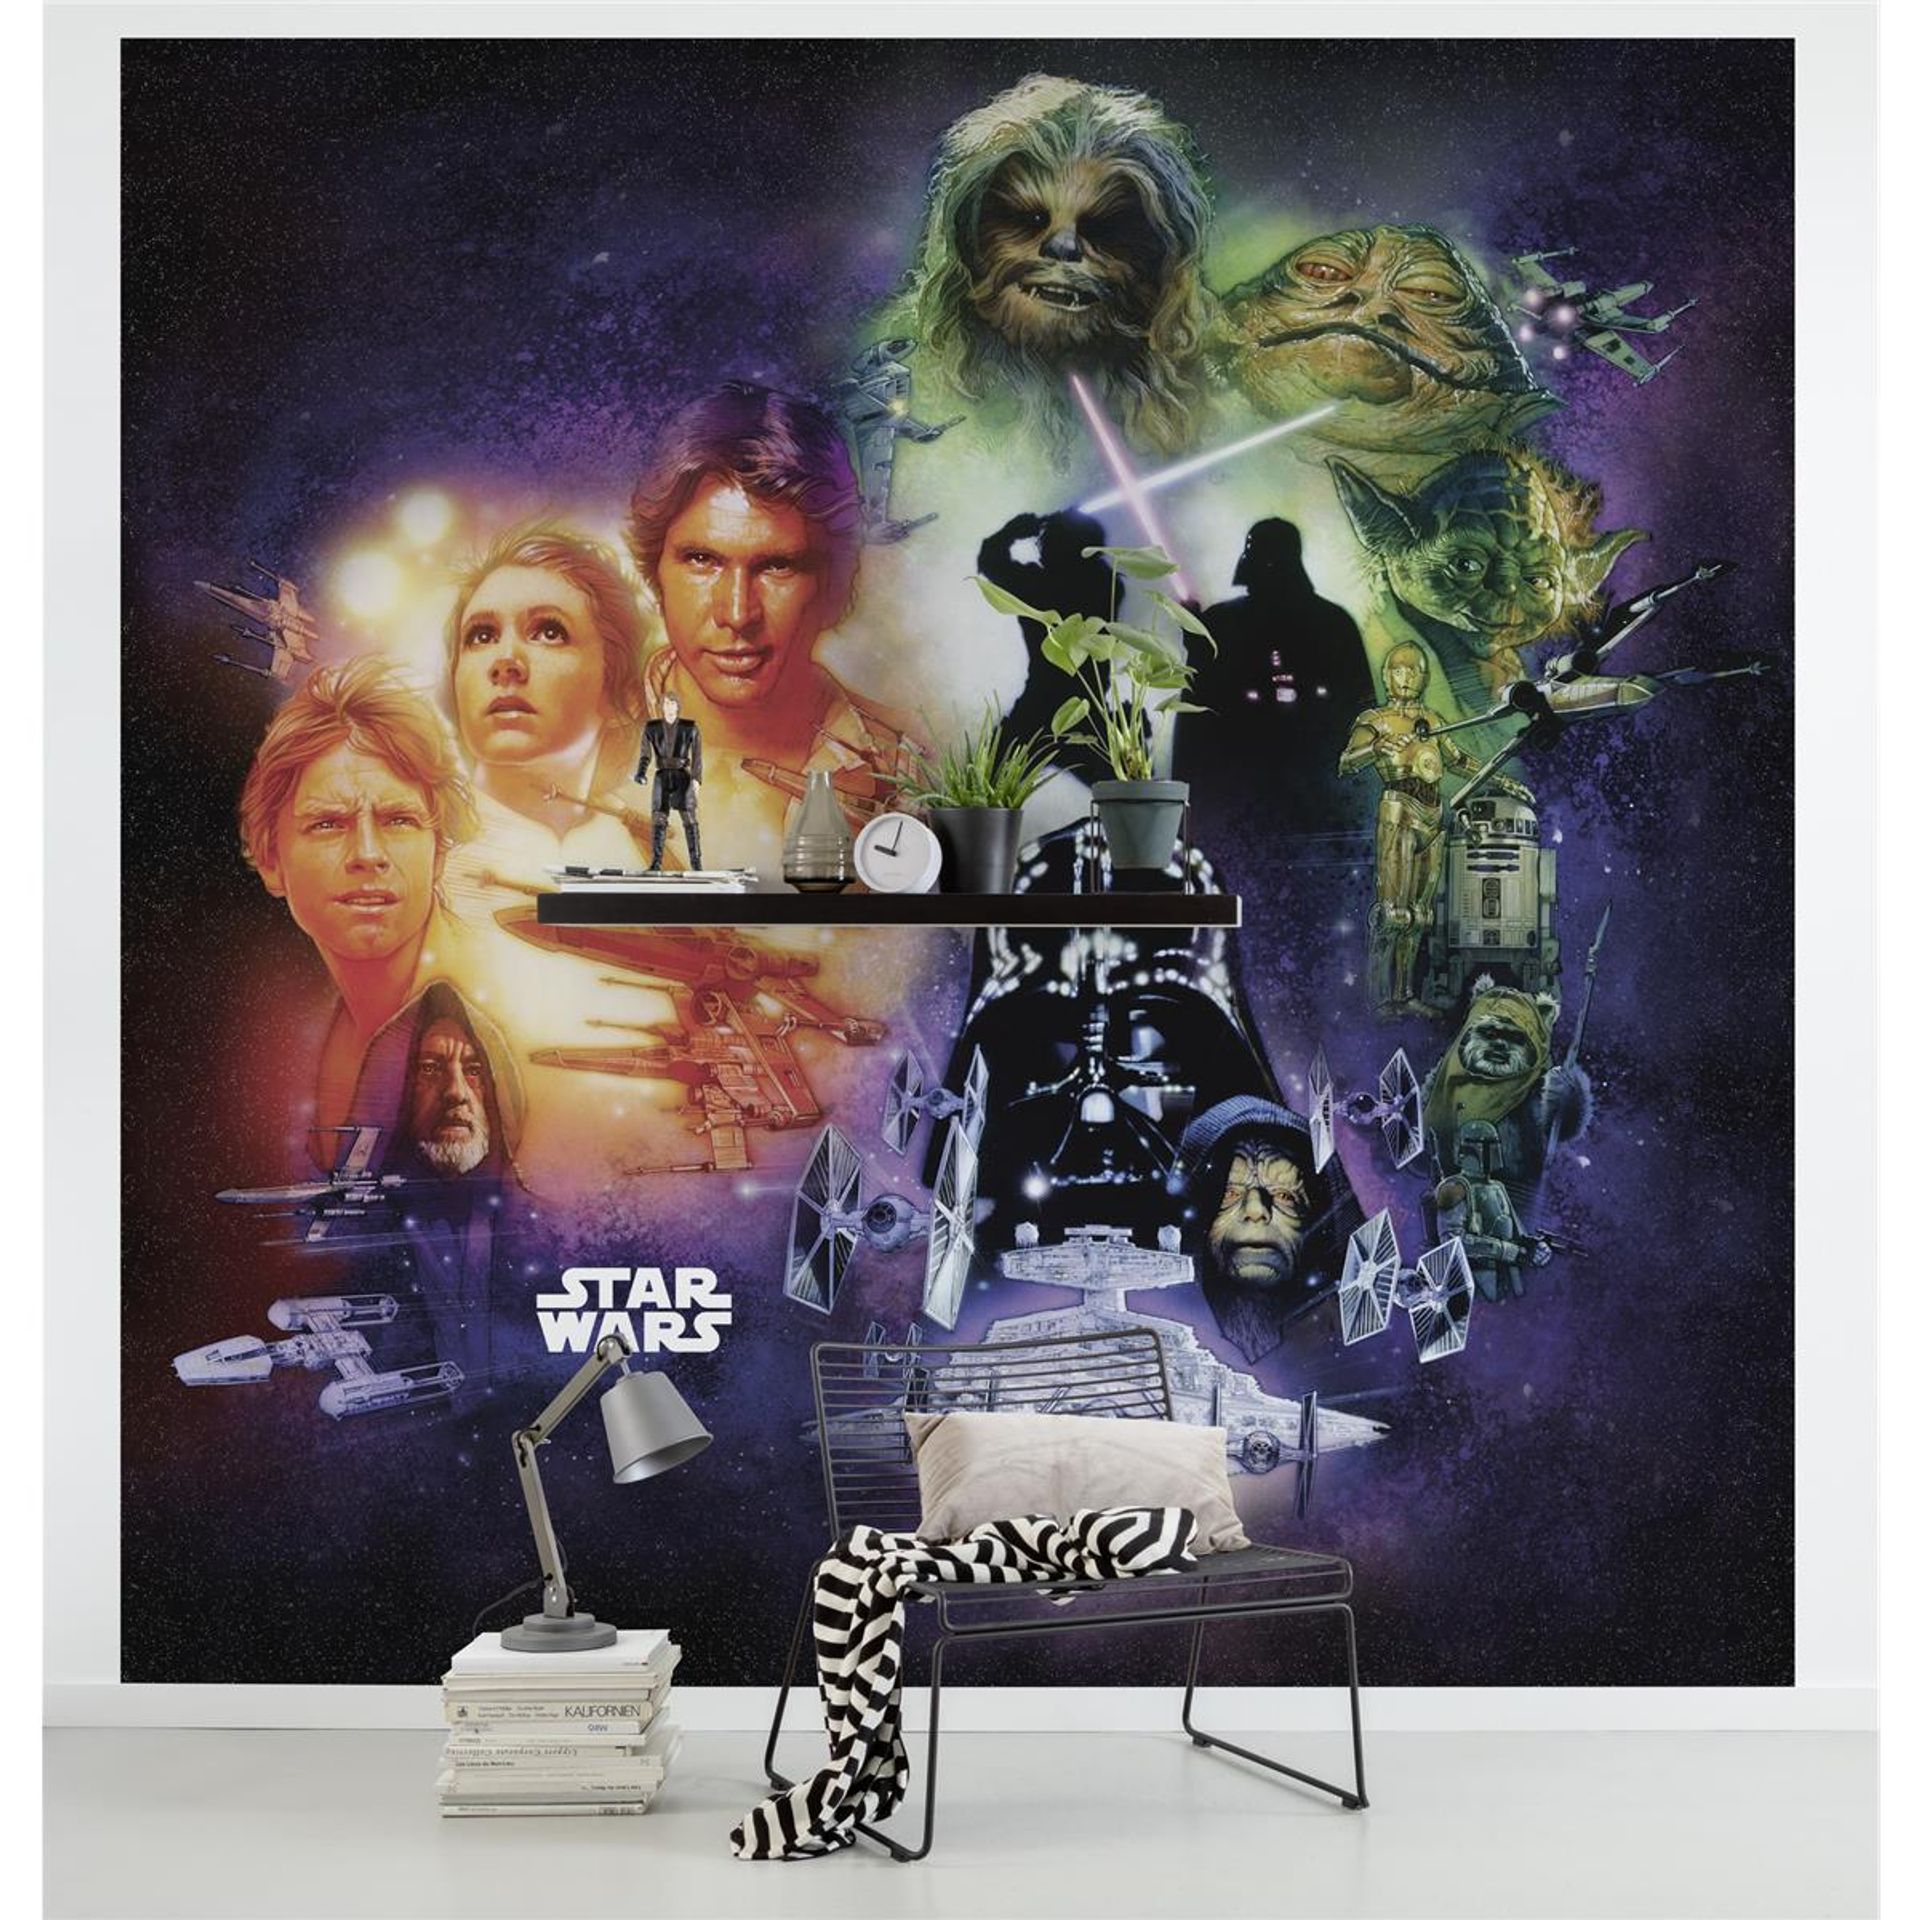 Vlies Fototapete - Star Wars Classic Poster Collage - Größe 250 x 250 cm